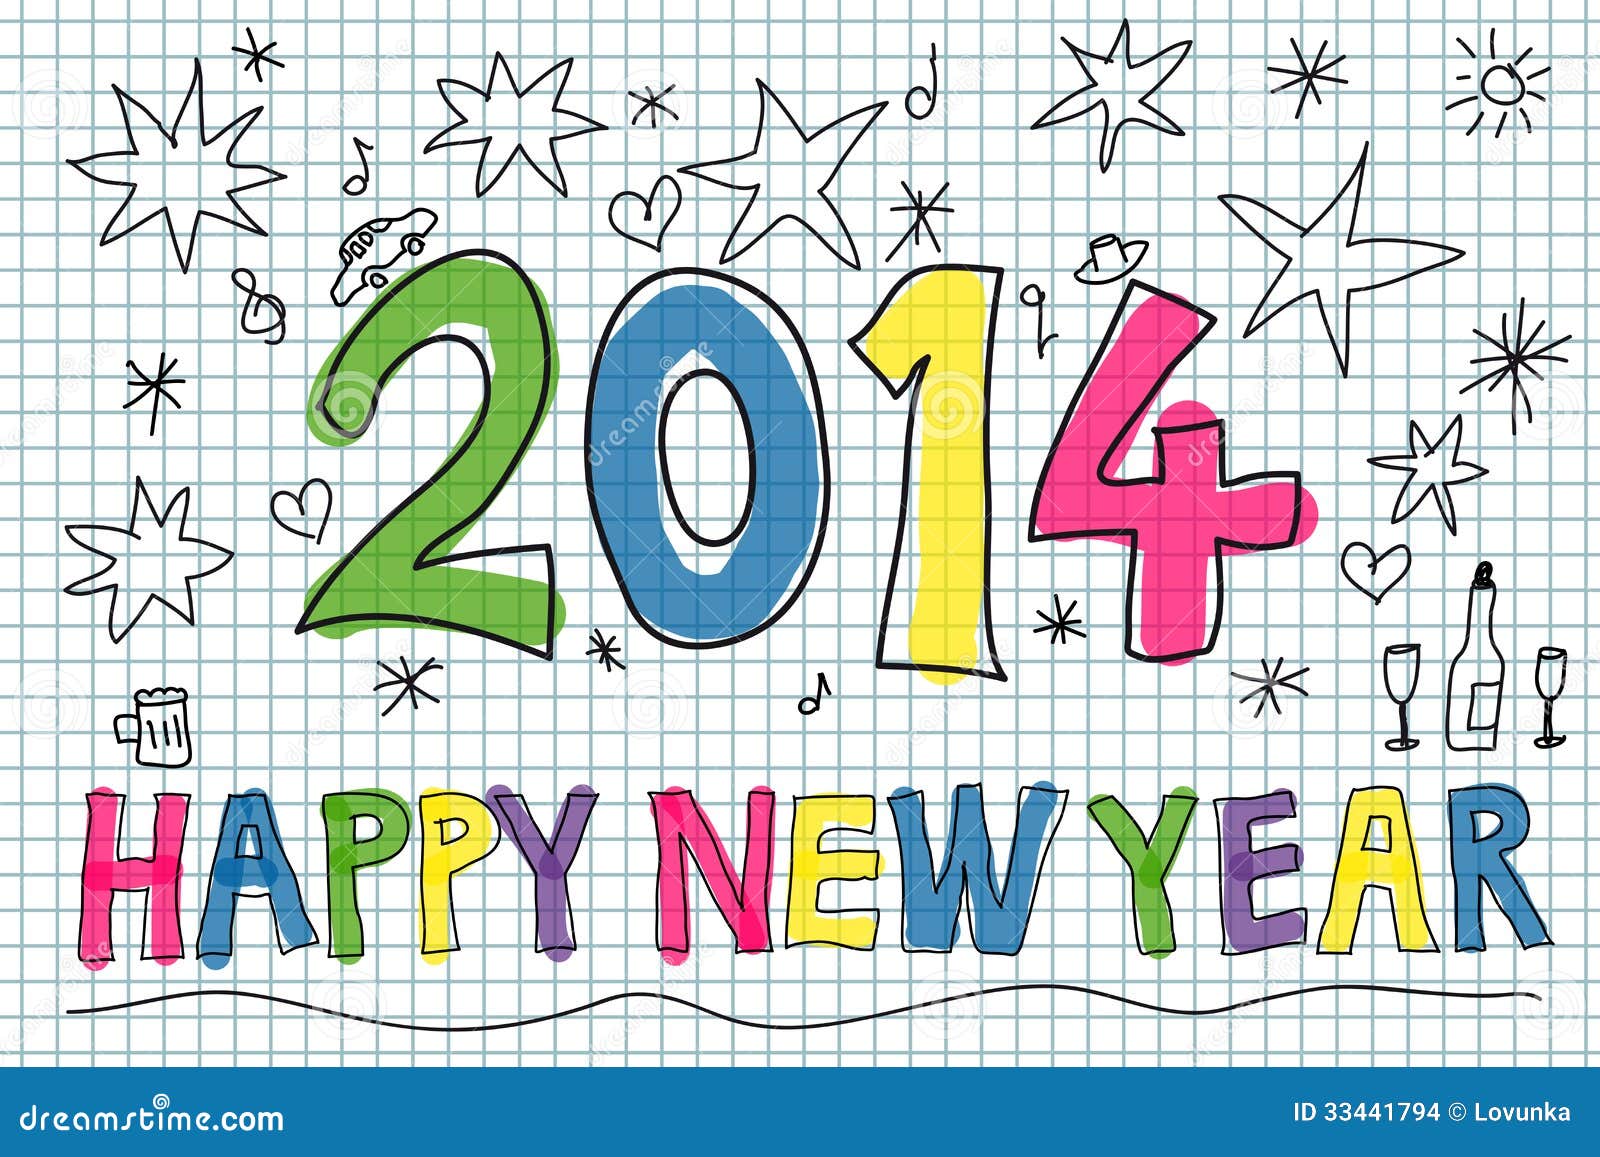 animated clipart happy new year 2014 - photo #22